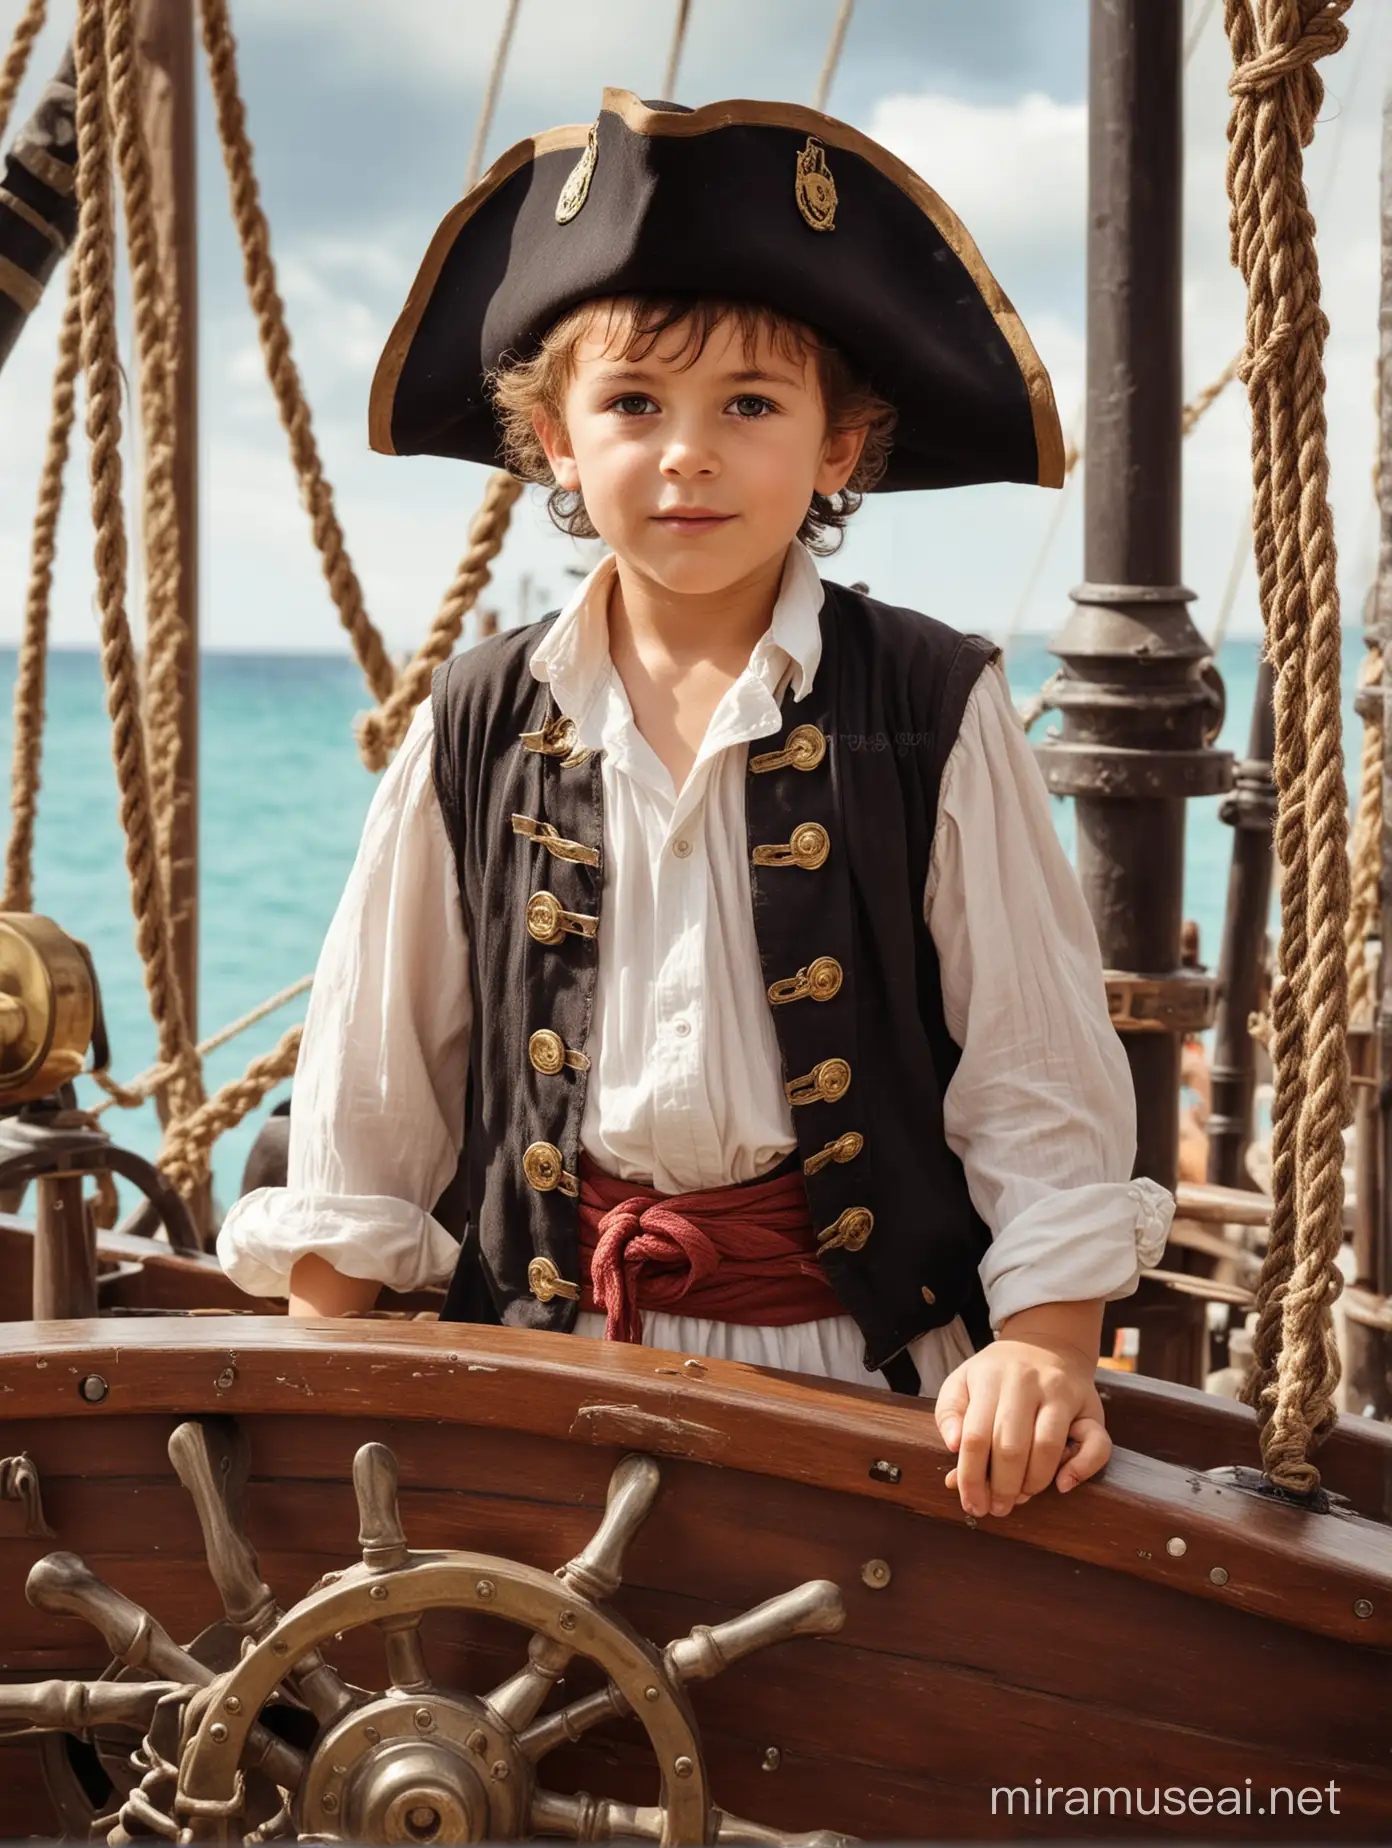 little boy as Carribean pirate in ship